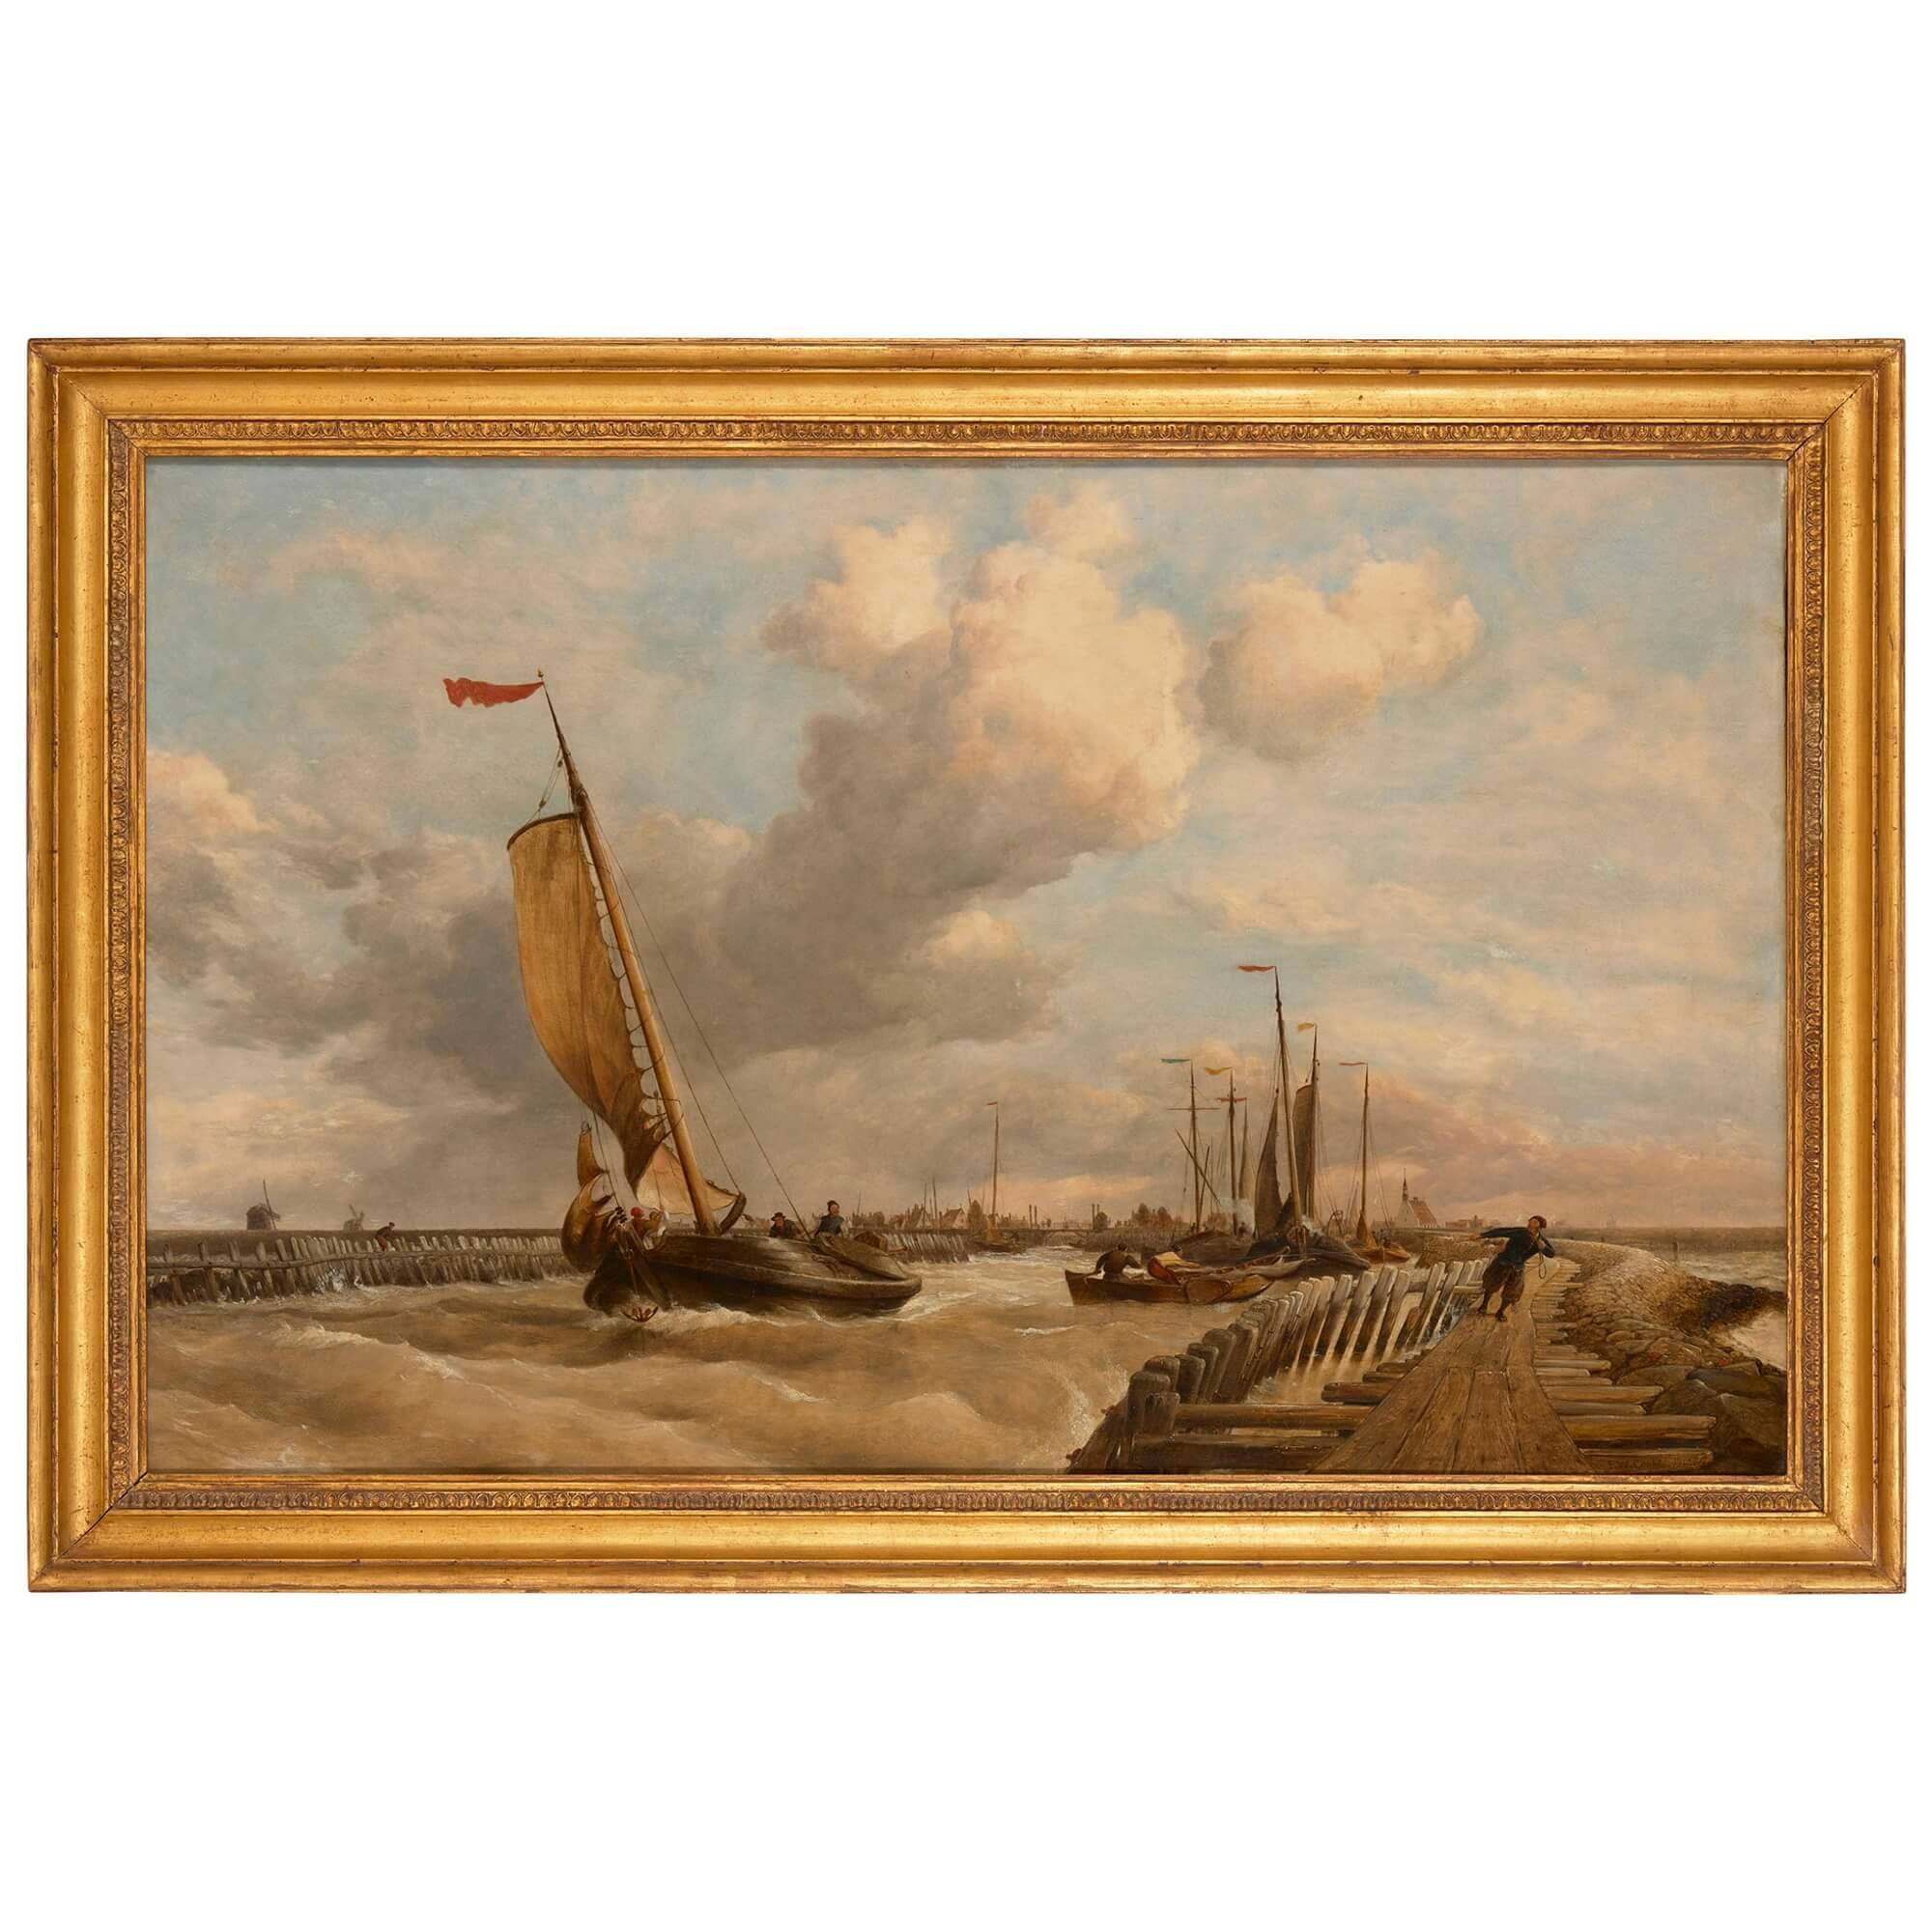 Grande peinture marine victorienne d'époque victorienne par Edward William Cooke, R.A.